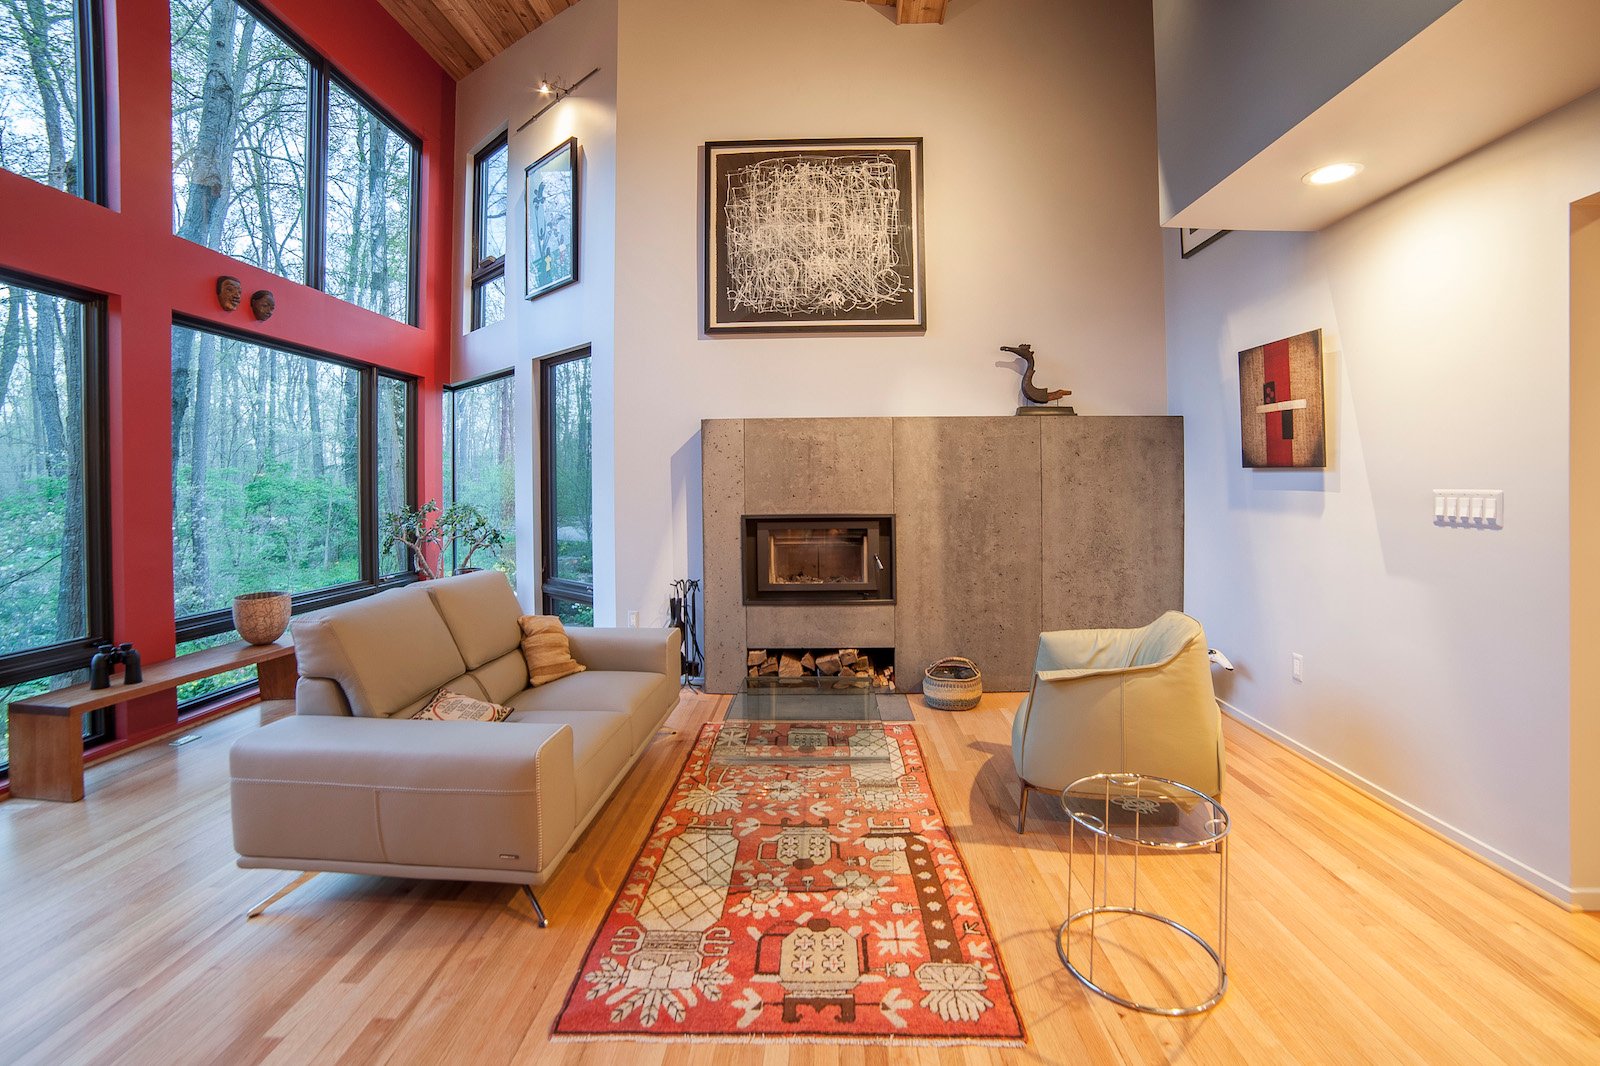 Interior addition with custom windows and custom concrete fireplace surround